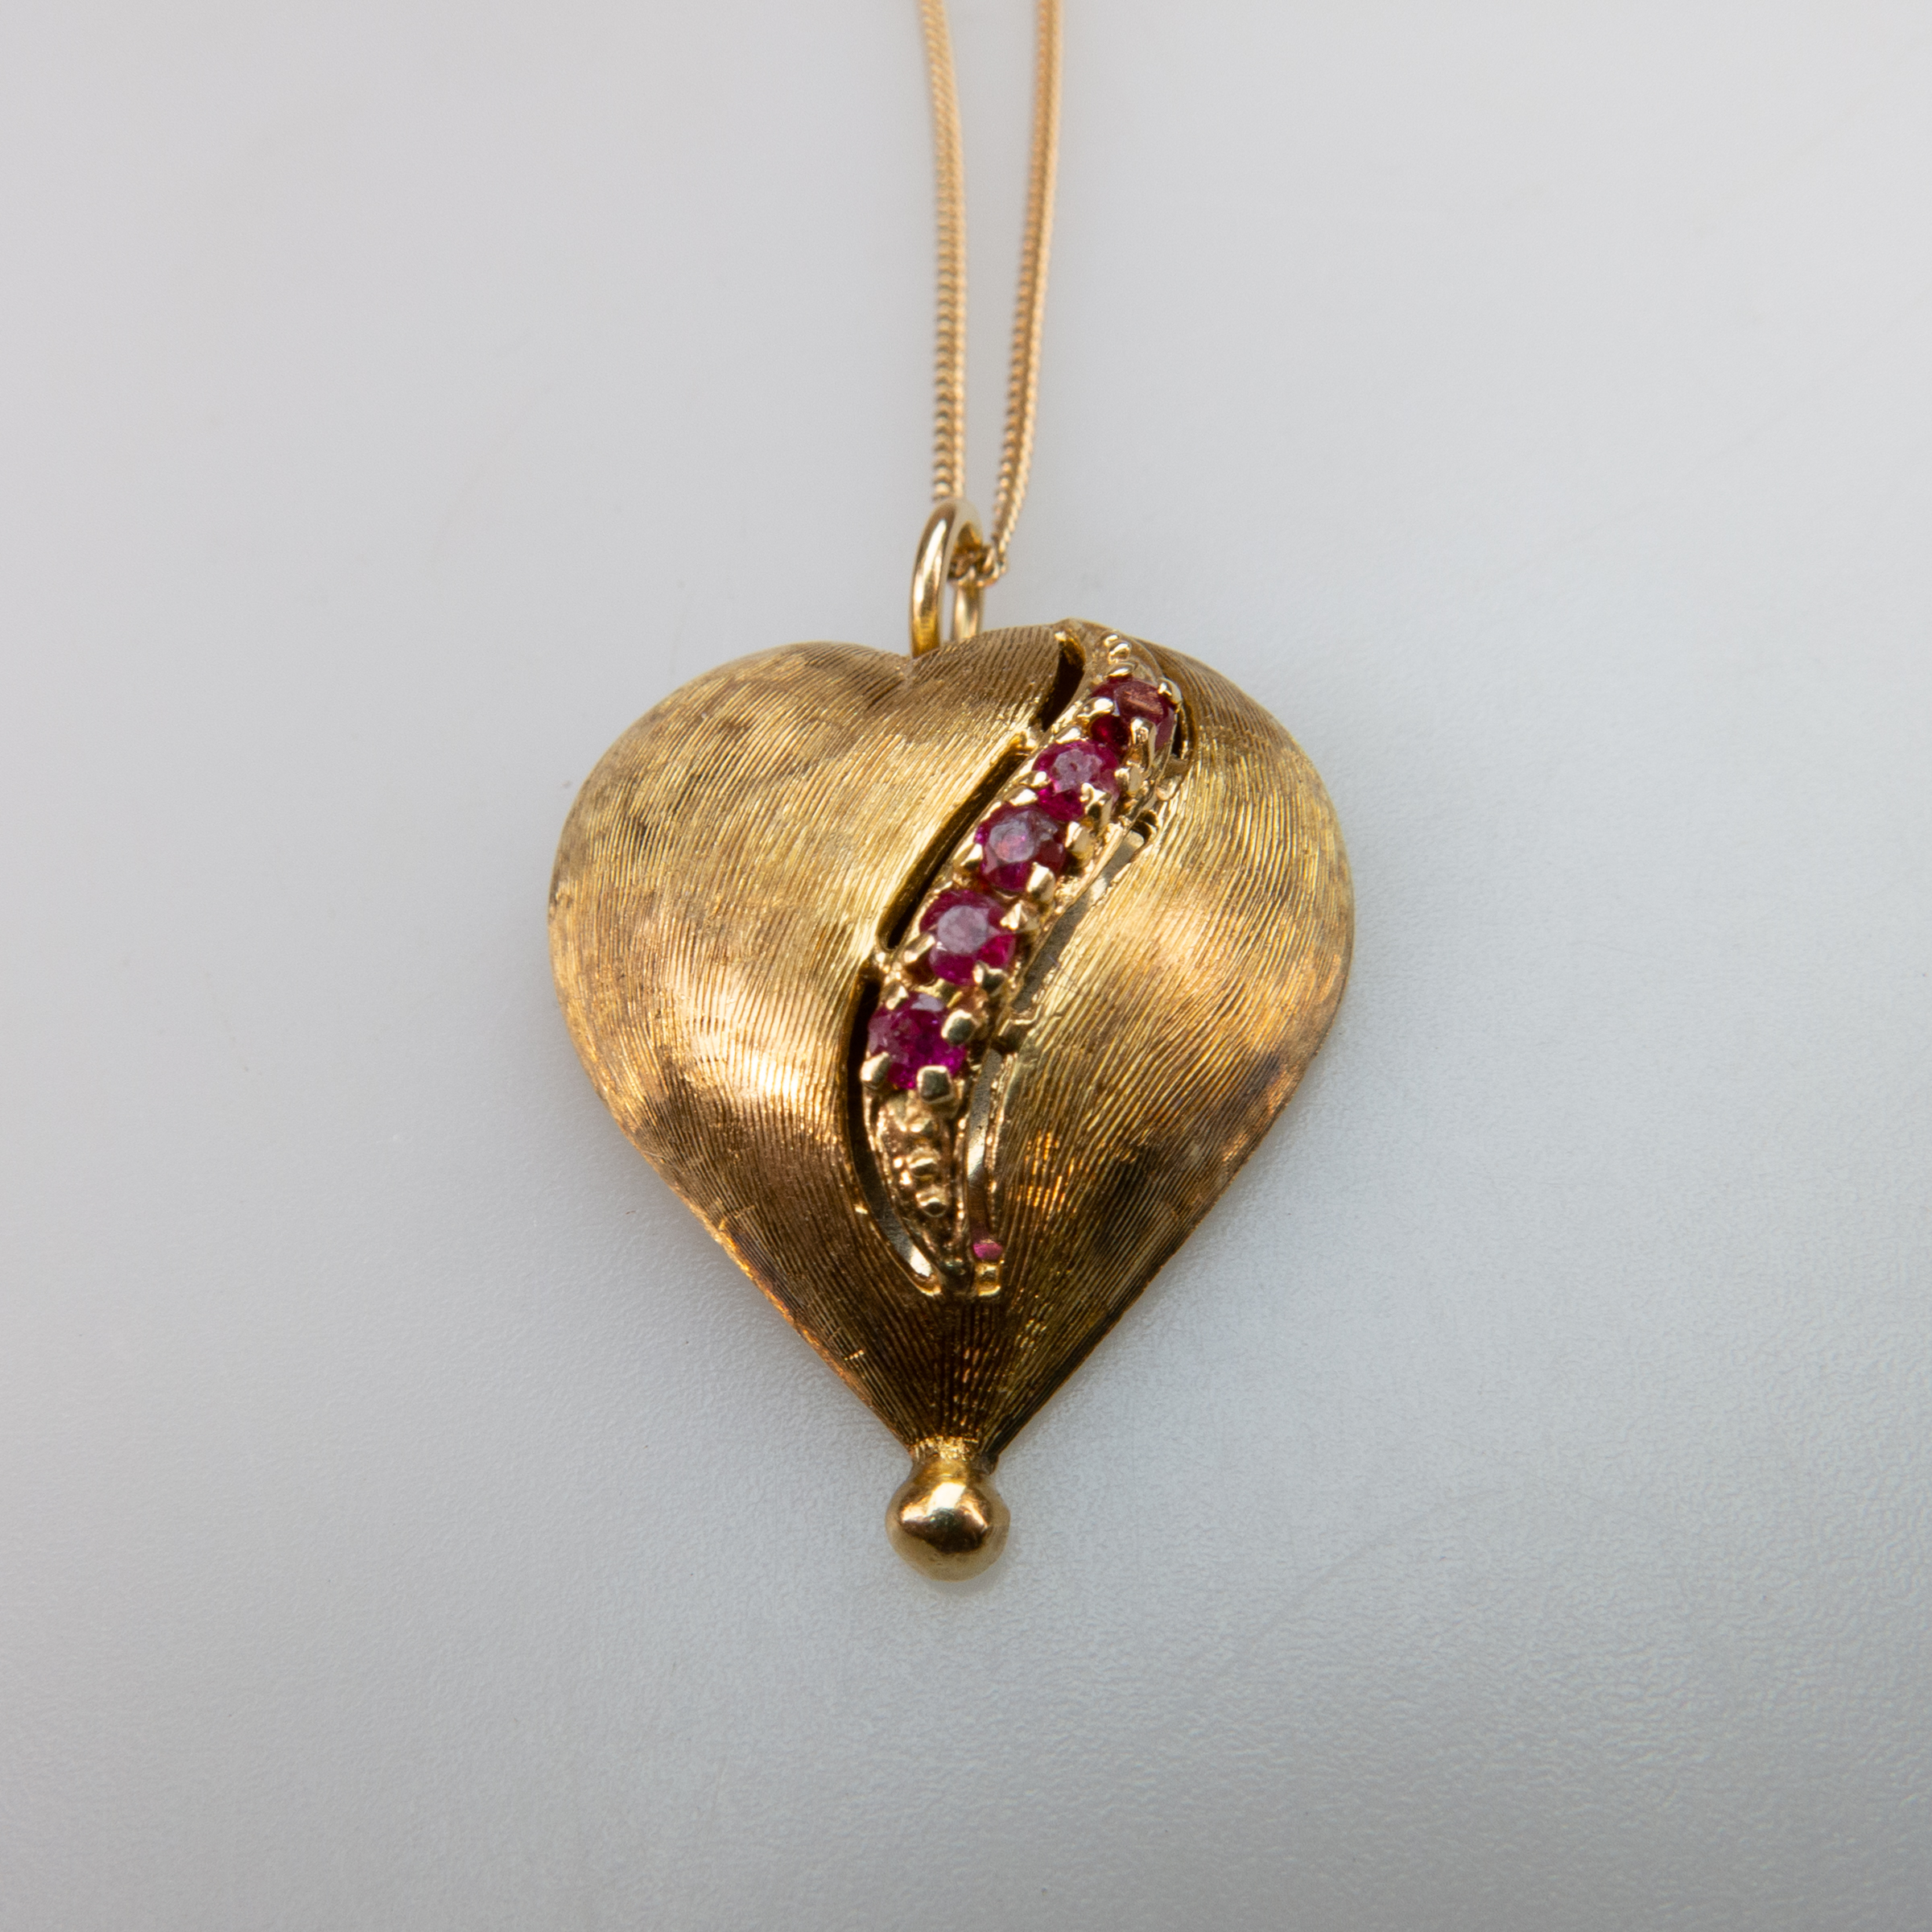 14k Yellow Gold Heart-Shaped Pendant